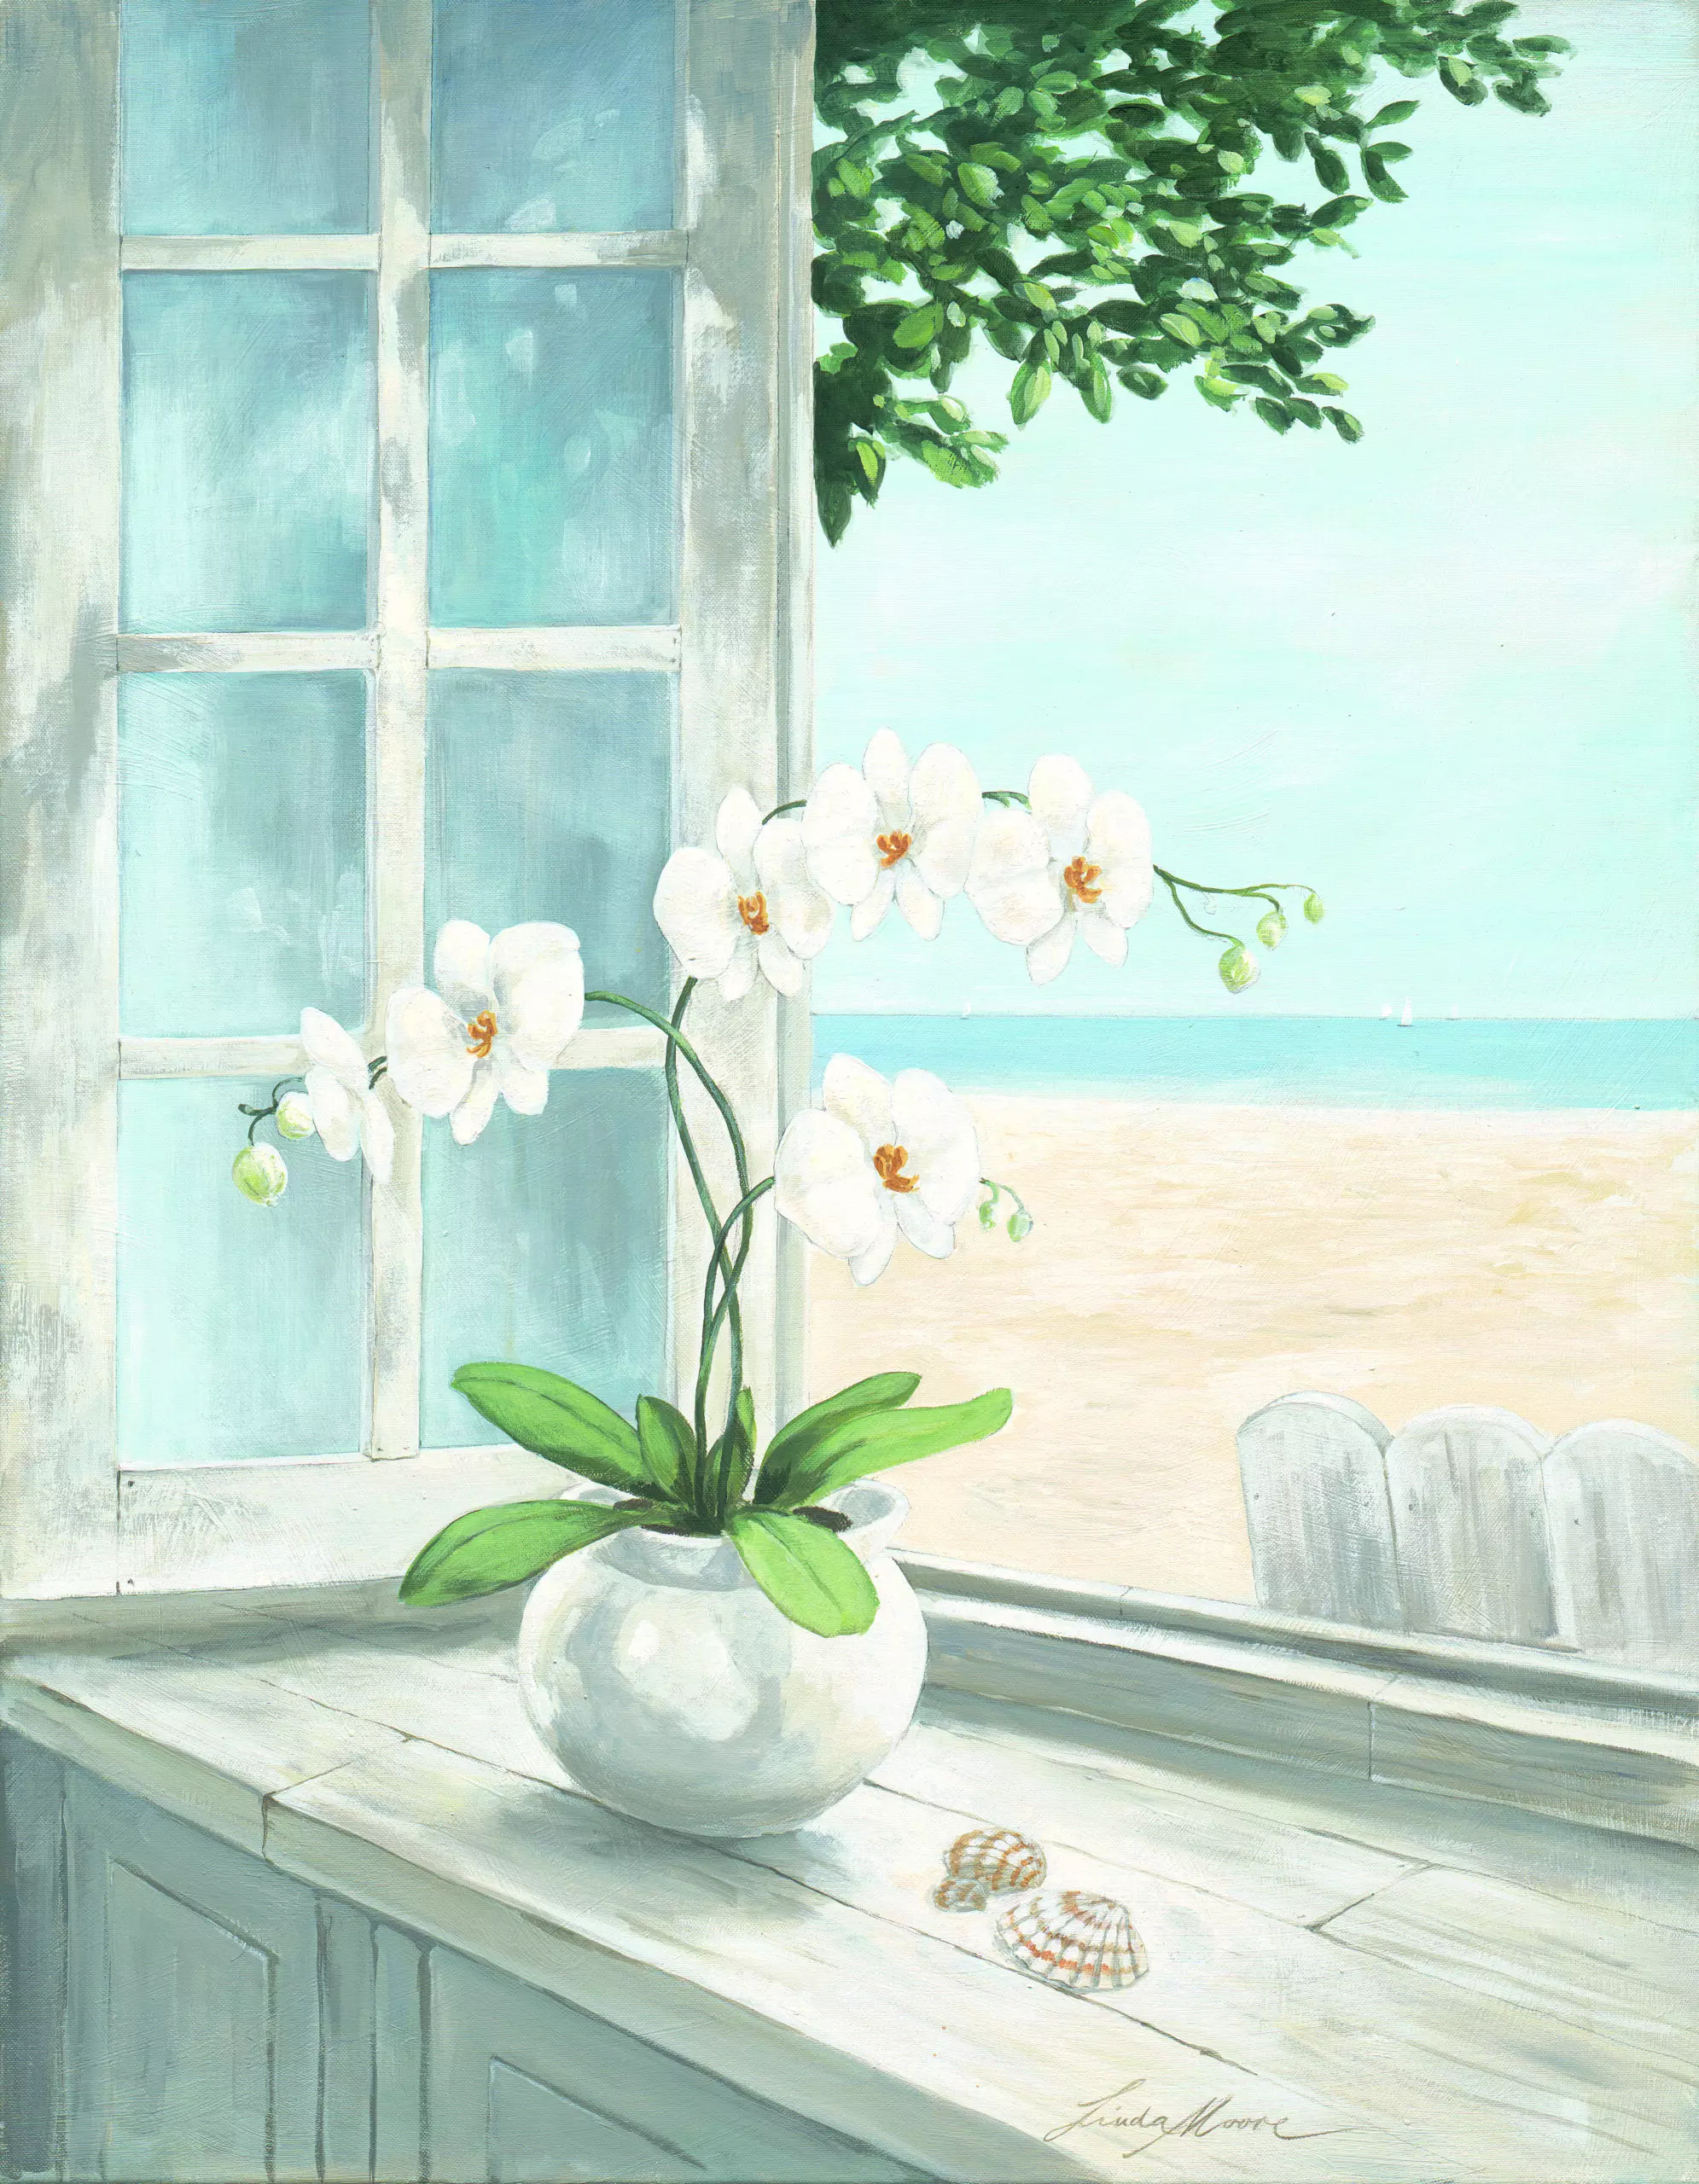 Wandbild (5002) Seashell präsentiert: Stillleben,Kreatives,Landschaften,Sommer,Strände,Floral,Sonstige Stillleben